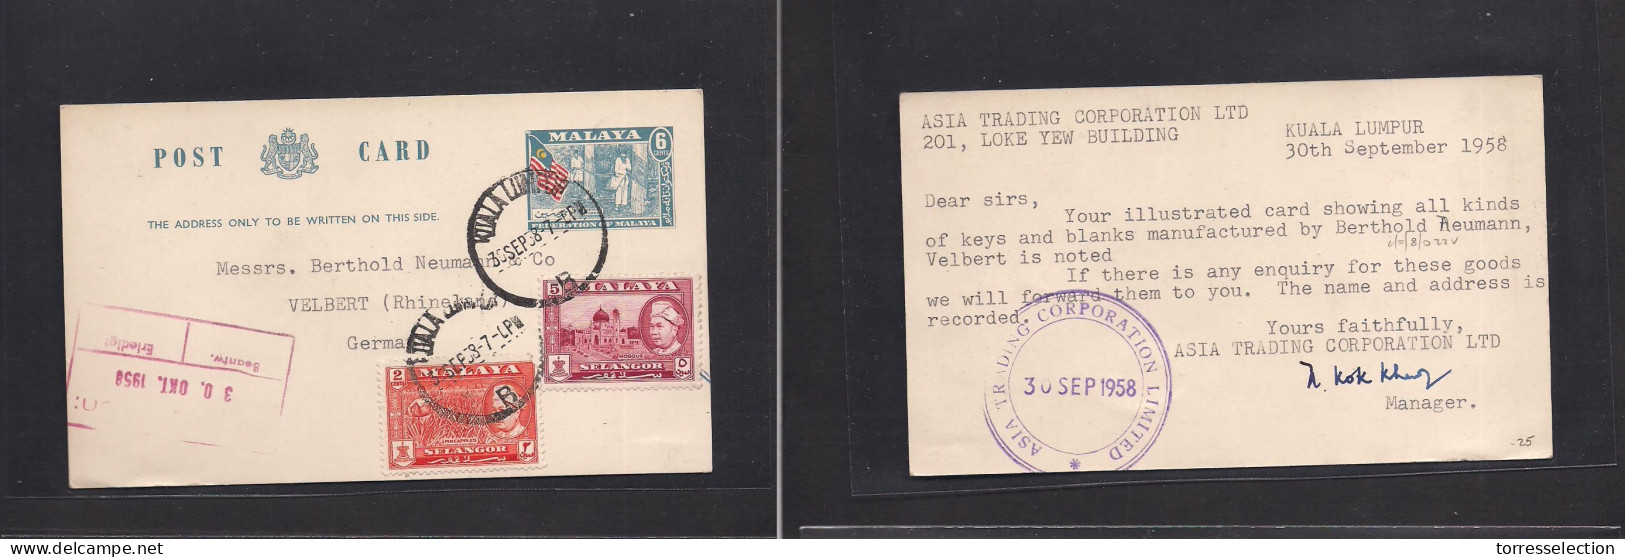 MALAYSIA. 1958 (30 Sept) KL - Germany, Velbut (30 Oct) 6c Blue Stat Card + 2 Adtls. Fine Used. XSALE. - Malasia (1964-...)